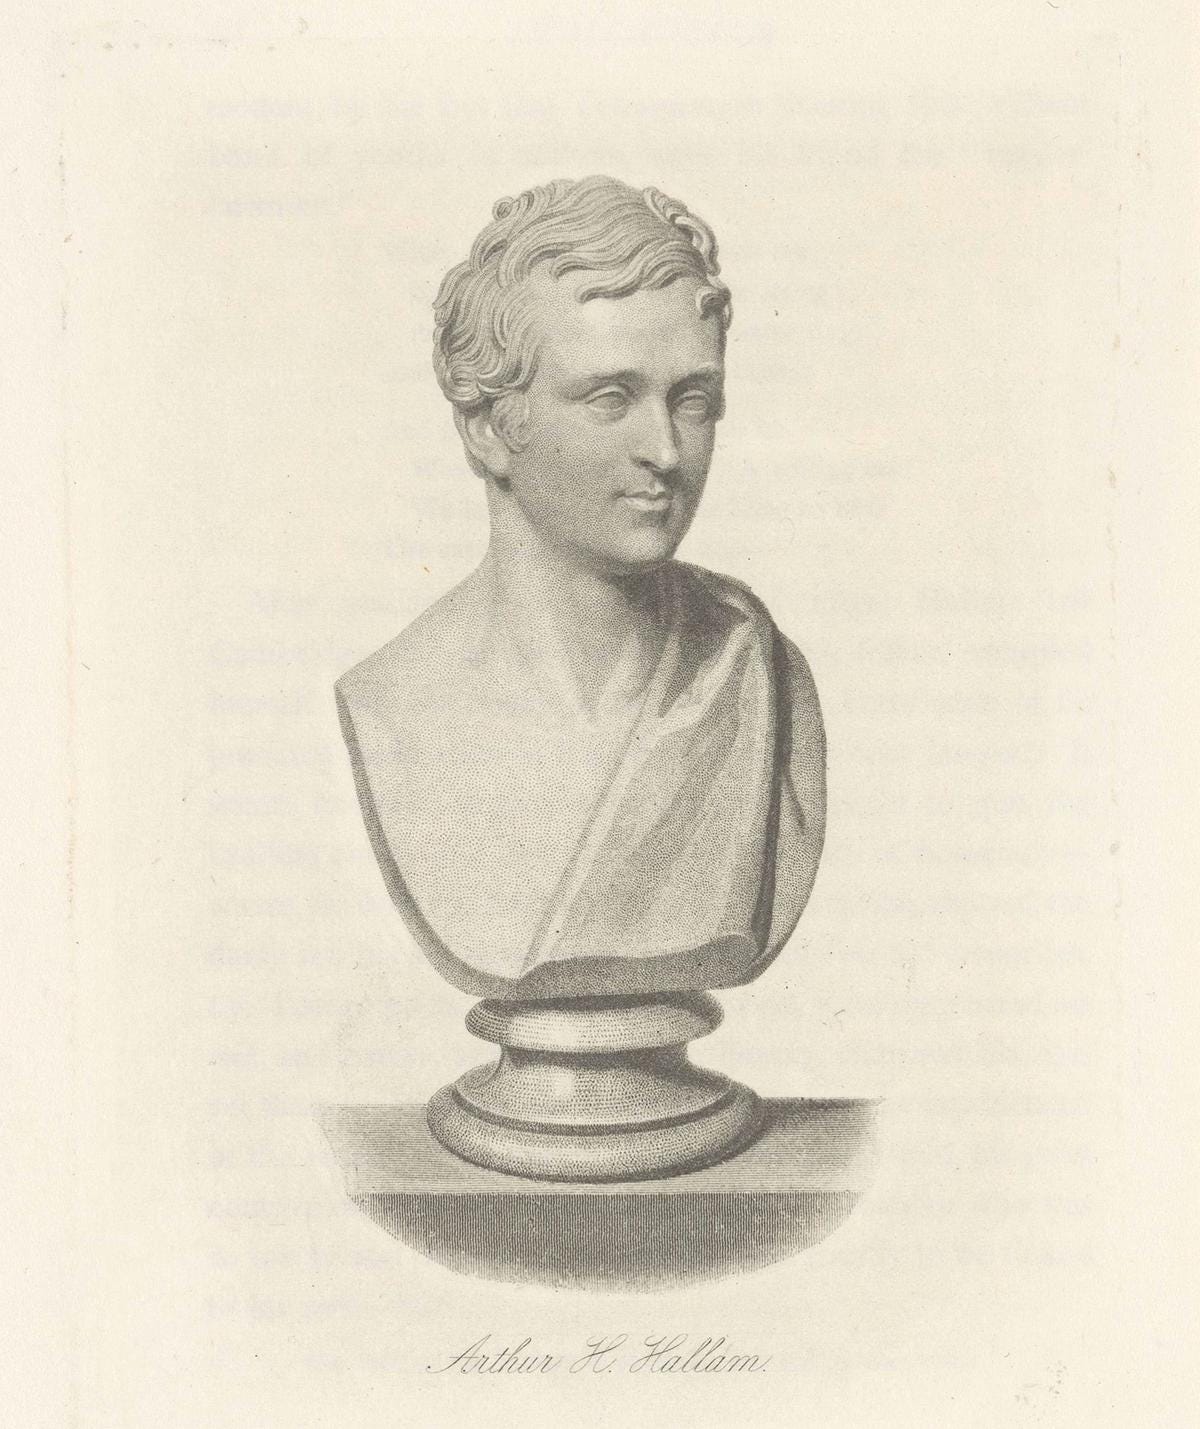 A print of Arthur H. Hallam's bust, circa 1884 to 1889. Rijksmuseum, Amsterdam. (Public Domain)